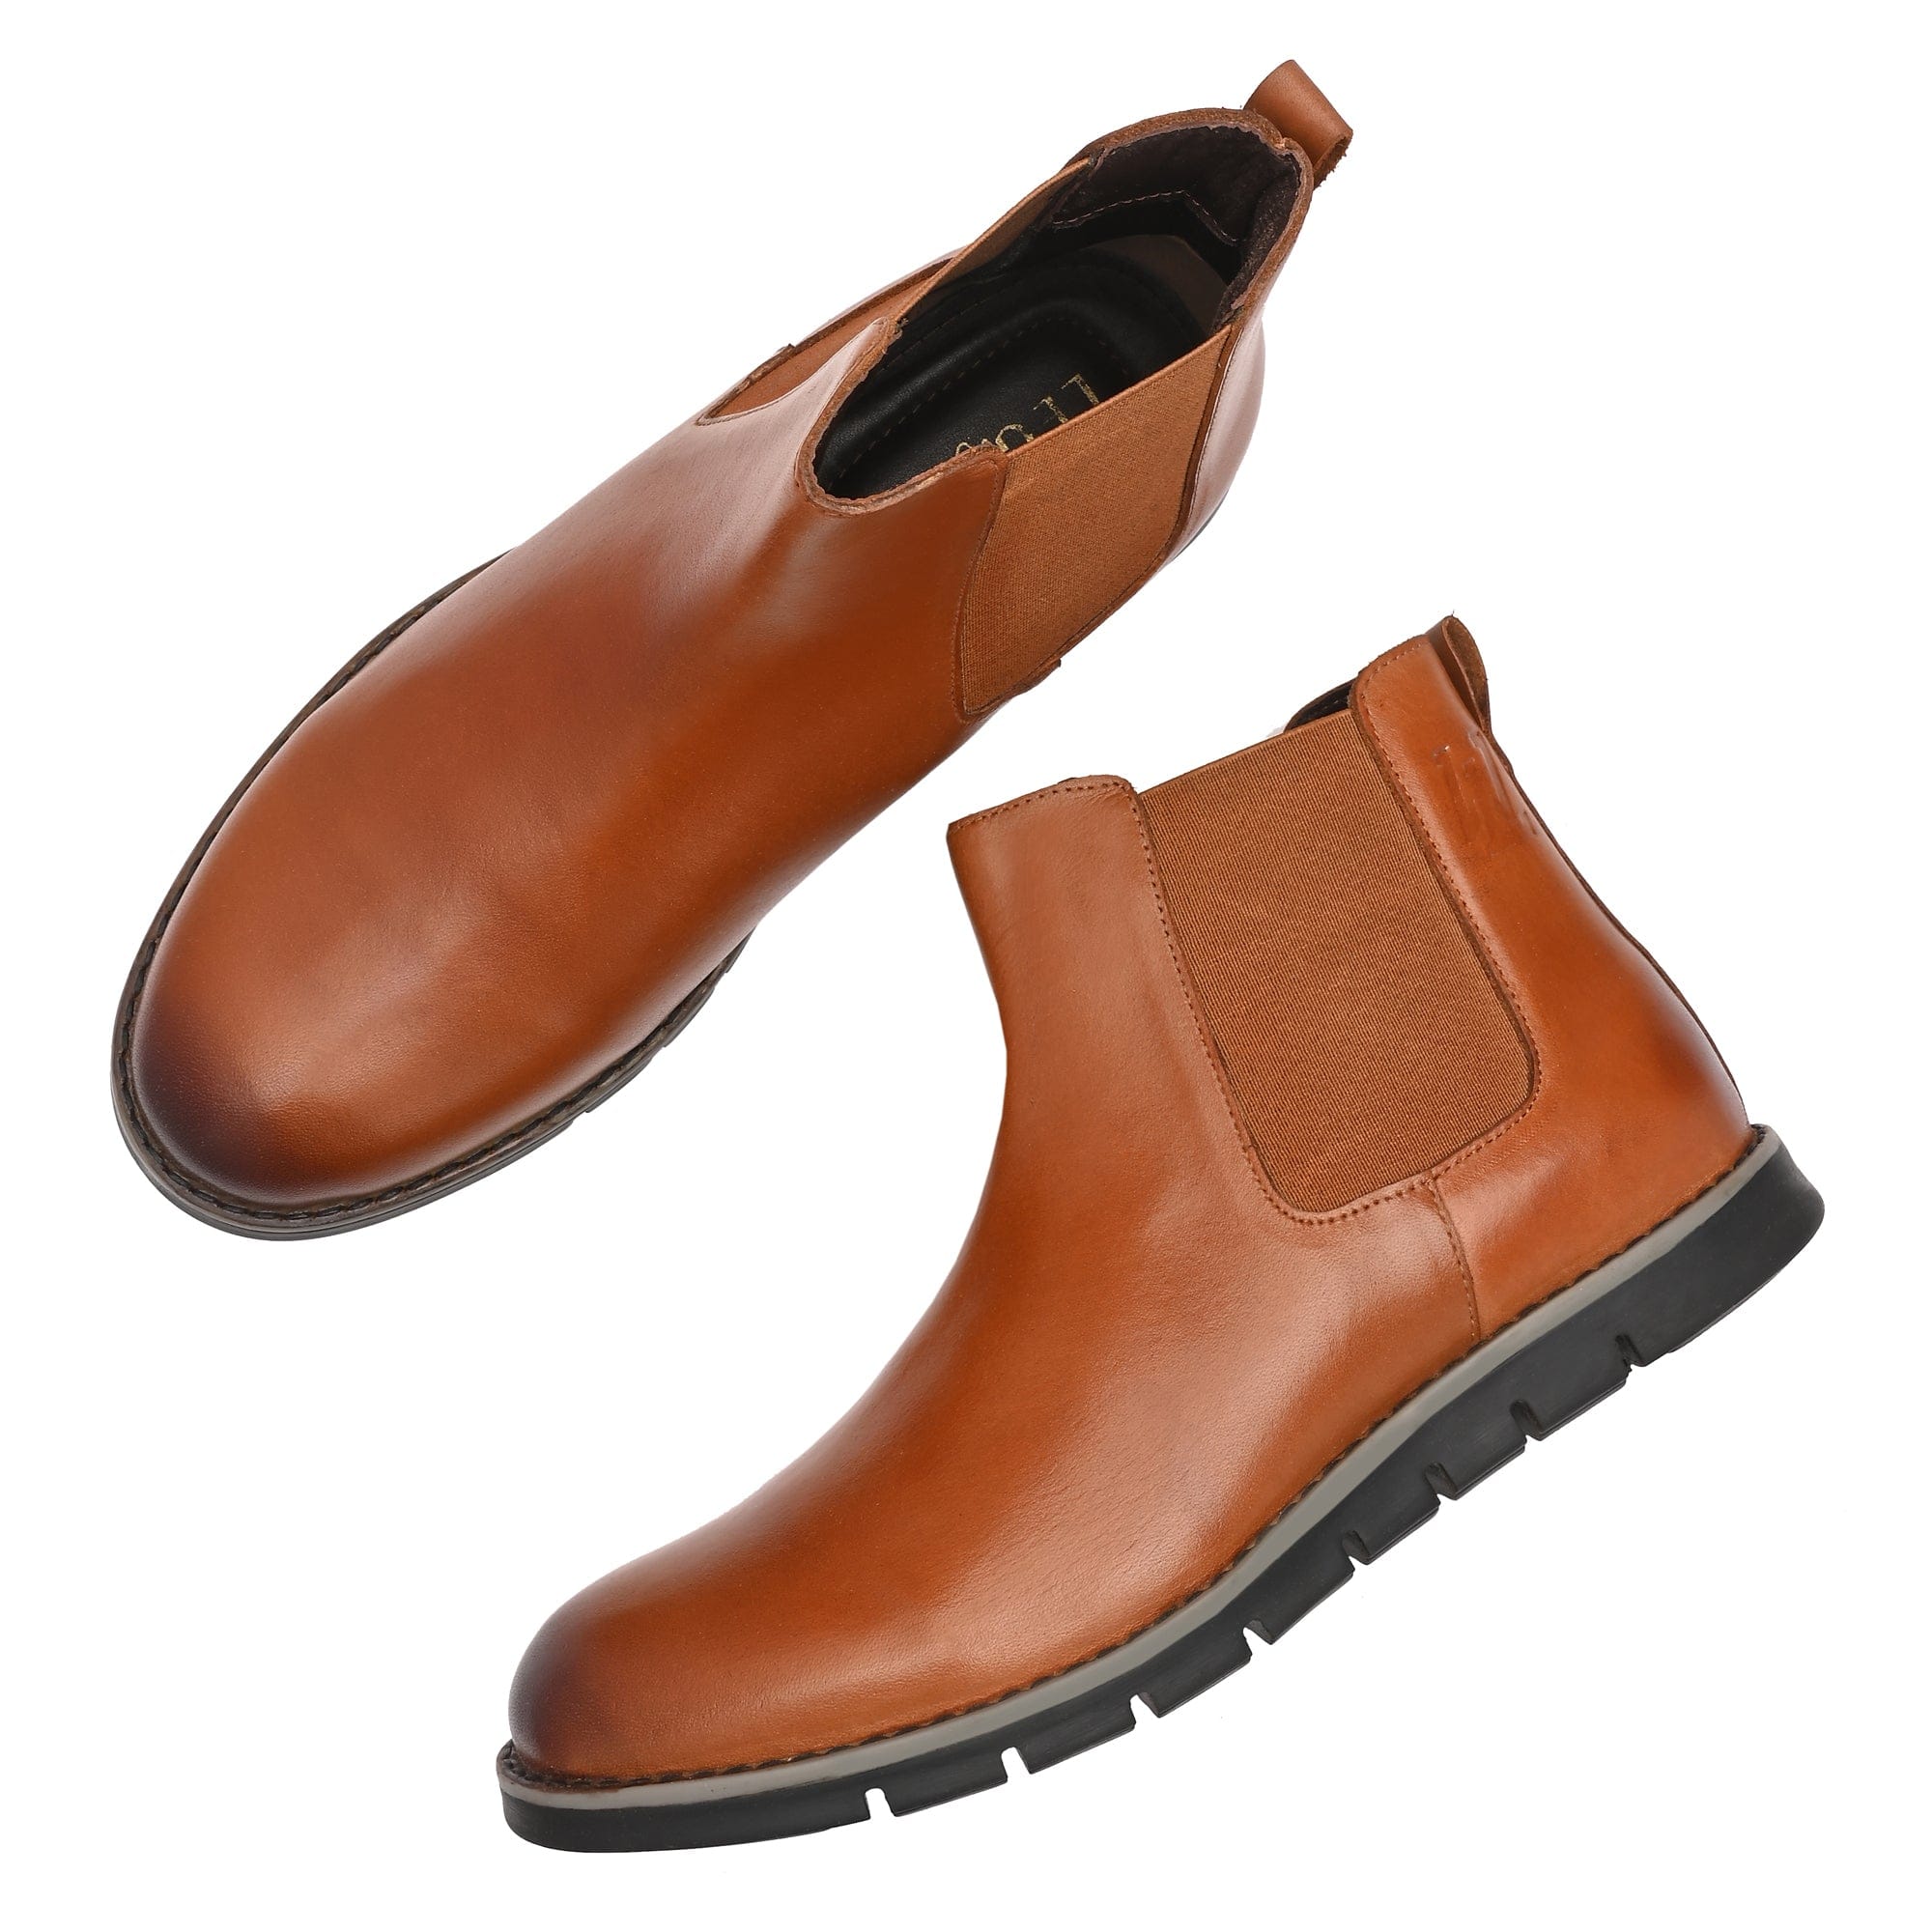 Legwork Chelsea 2.1 Original Tan Italian Leather Boot